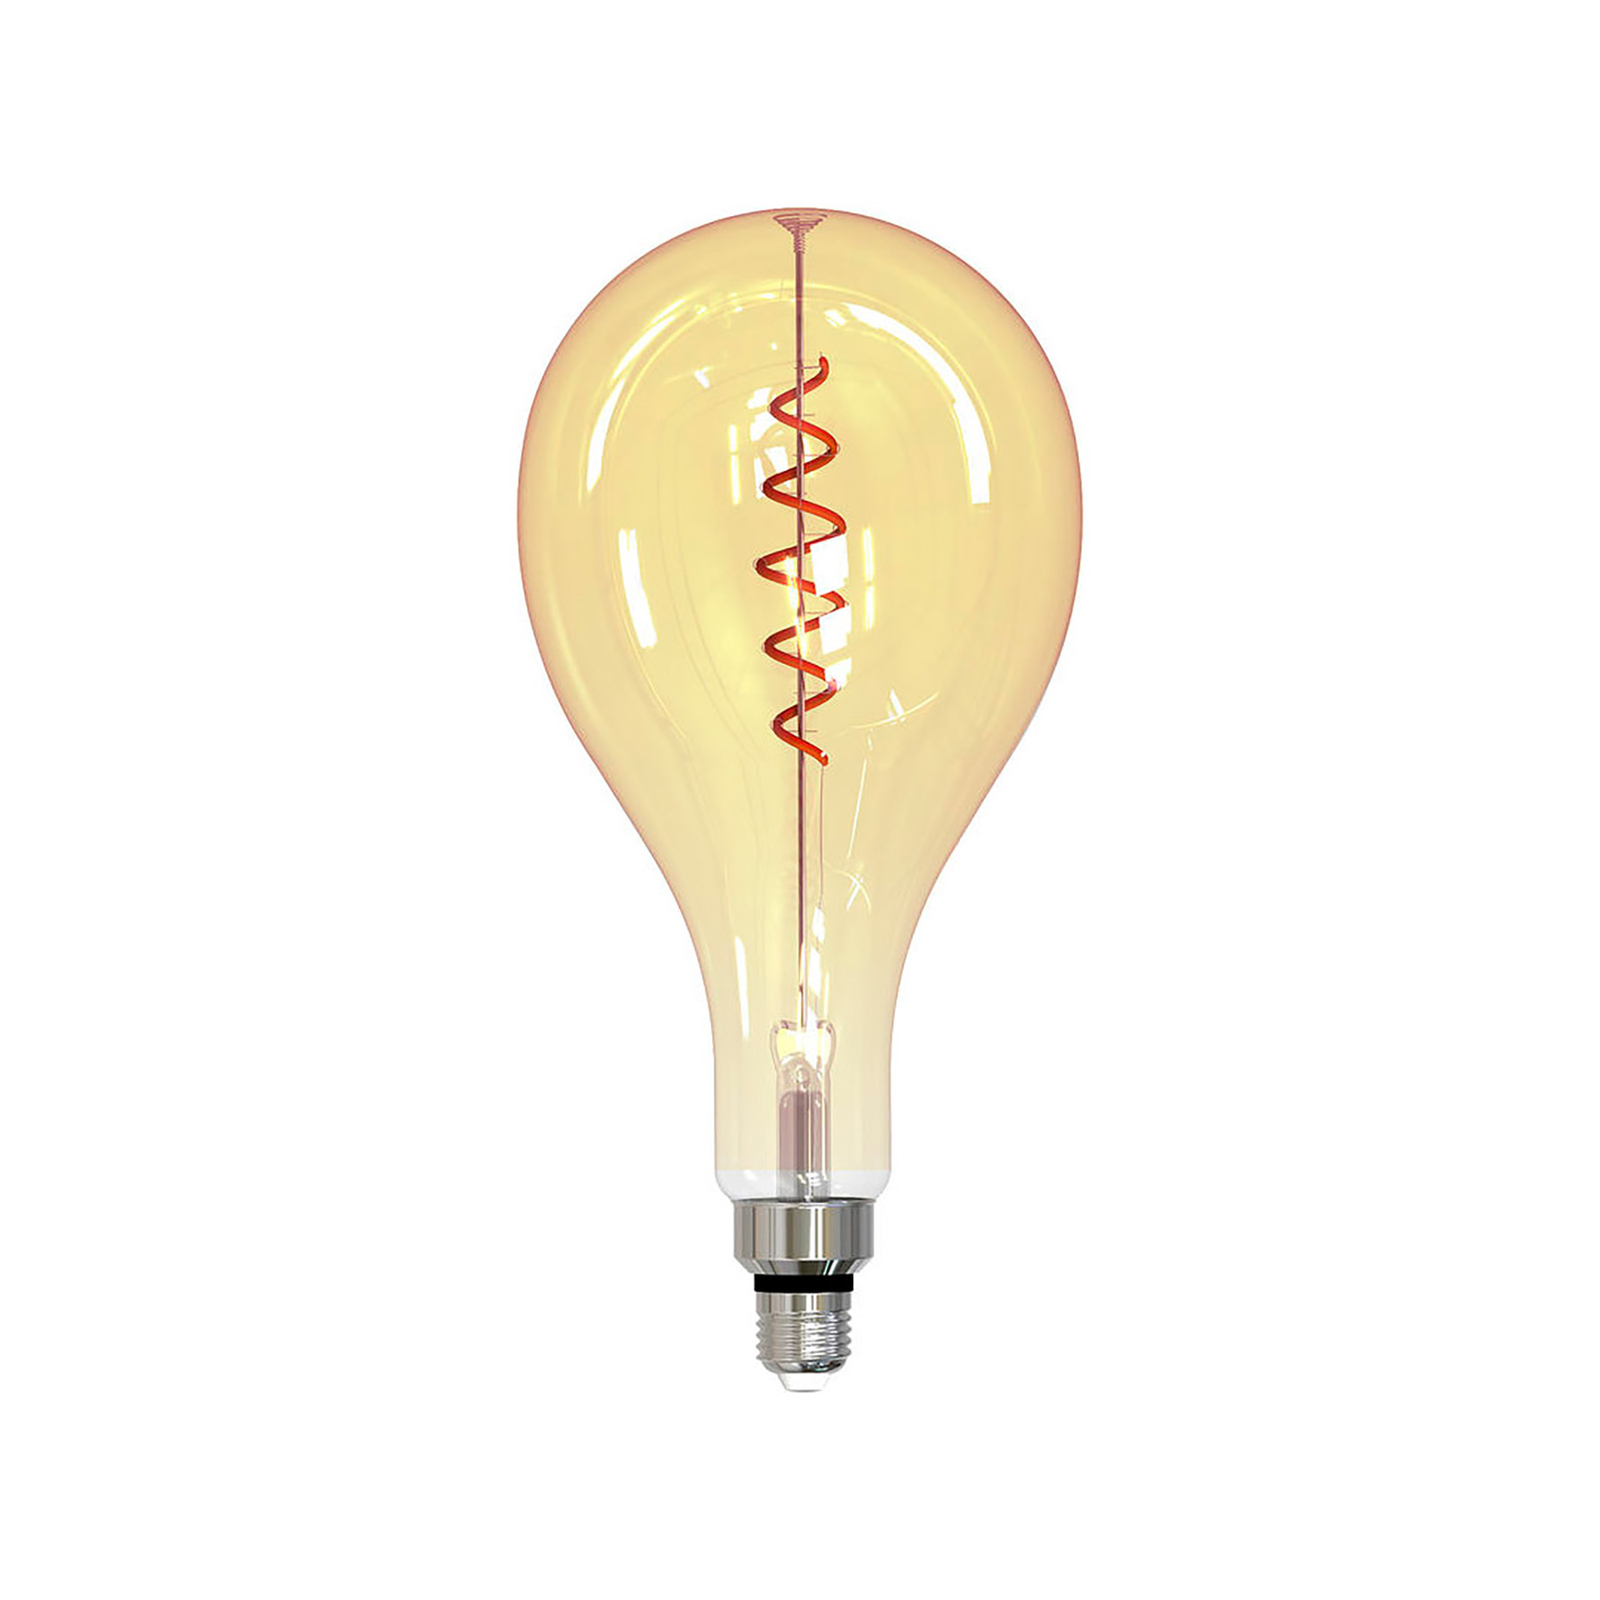 Müller Licht tint white LED-Lampe E27 4,9 W gold 